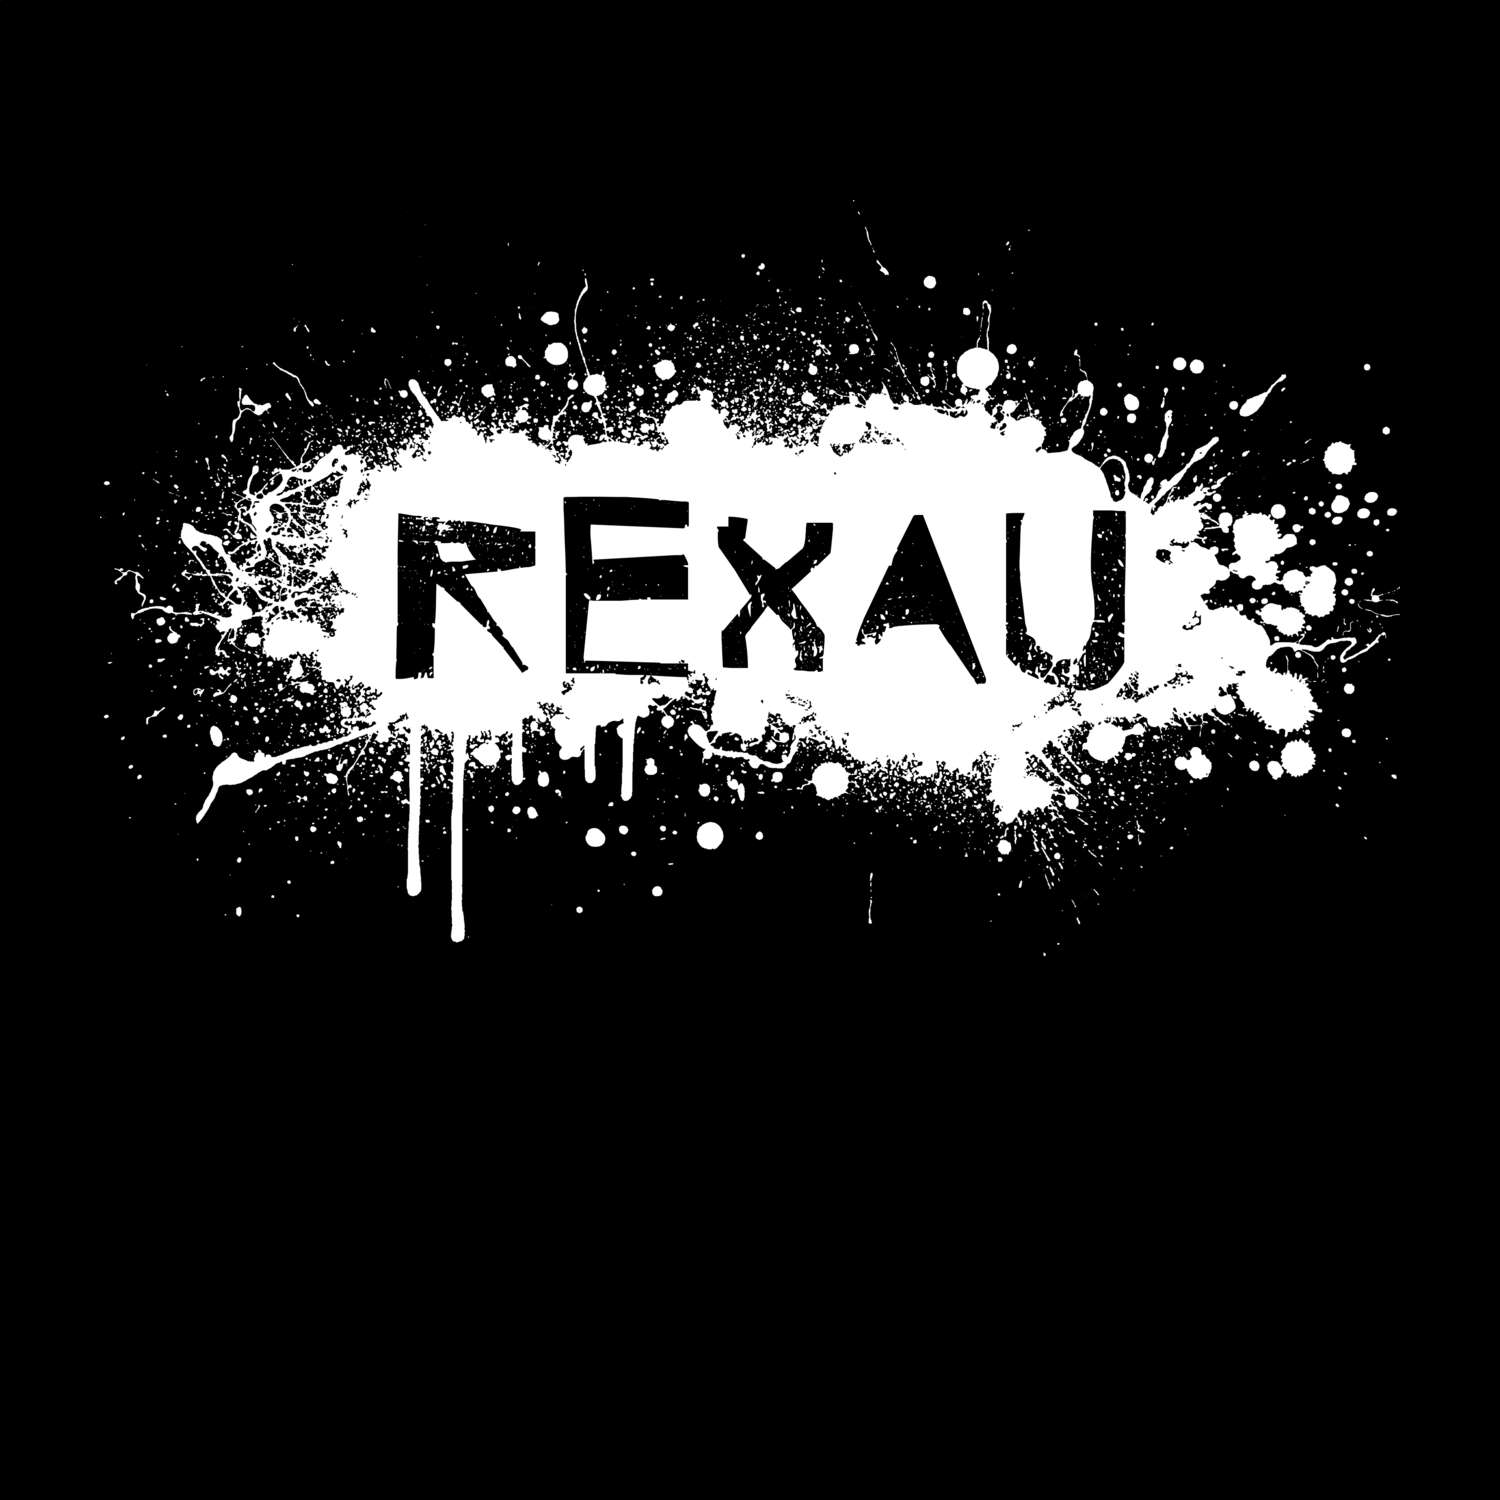 Rexau T-Shirt »Paint Splash Punk«